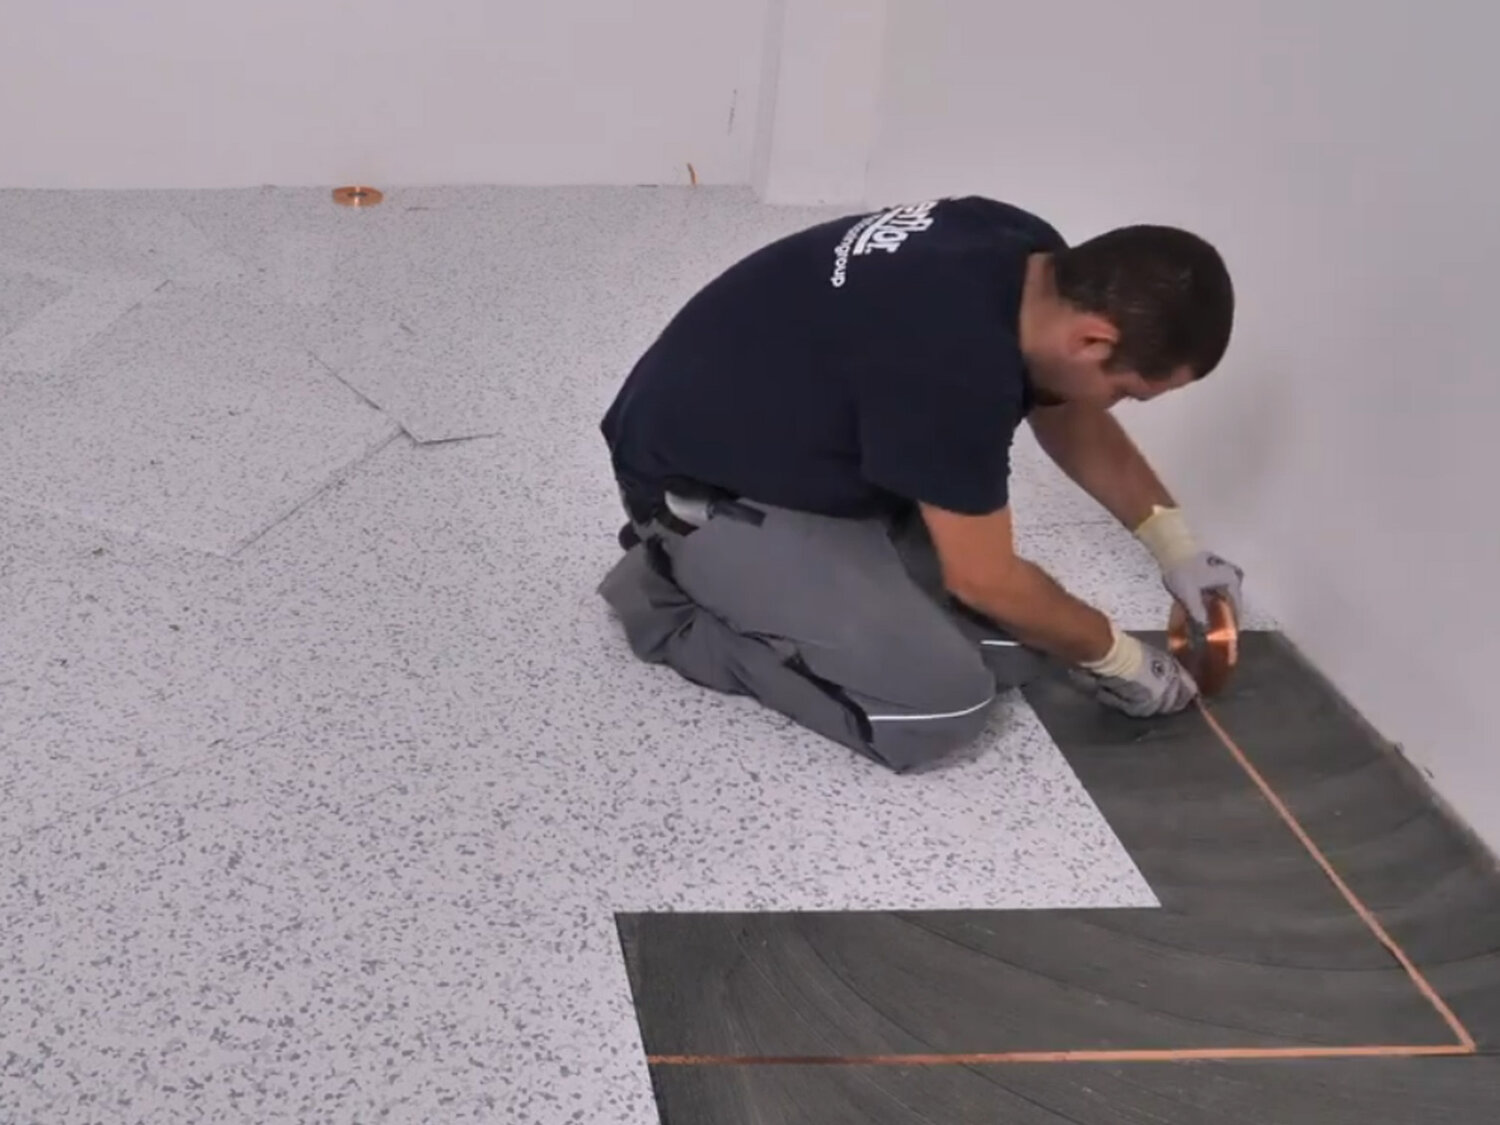 Statguard Flooring - 81524 Copper Foil Grounding Strip, 2 in x 24 in